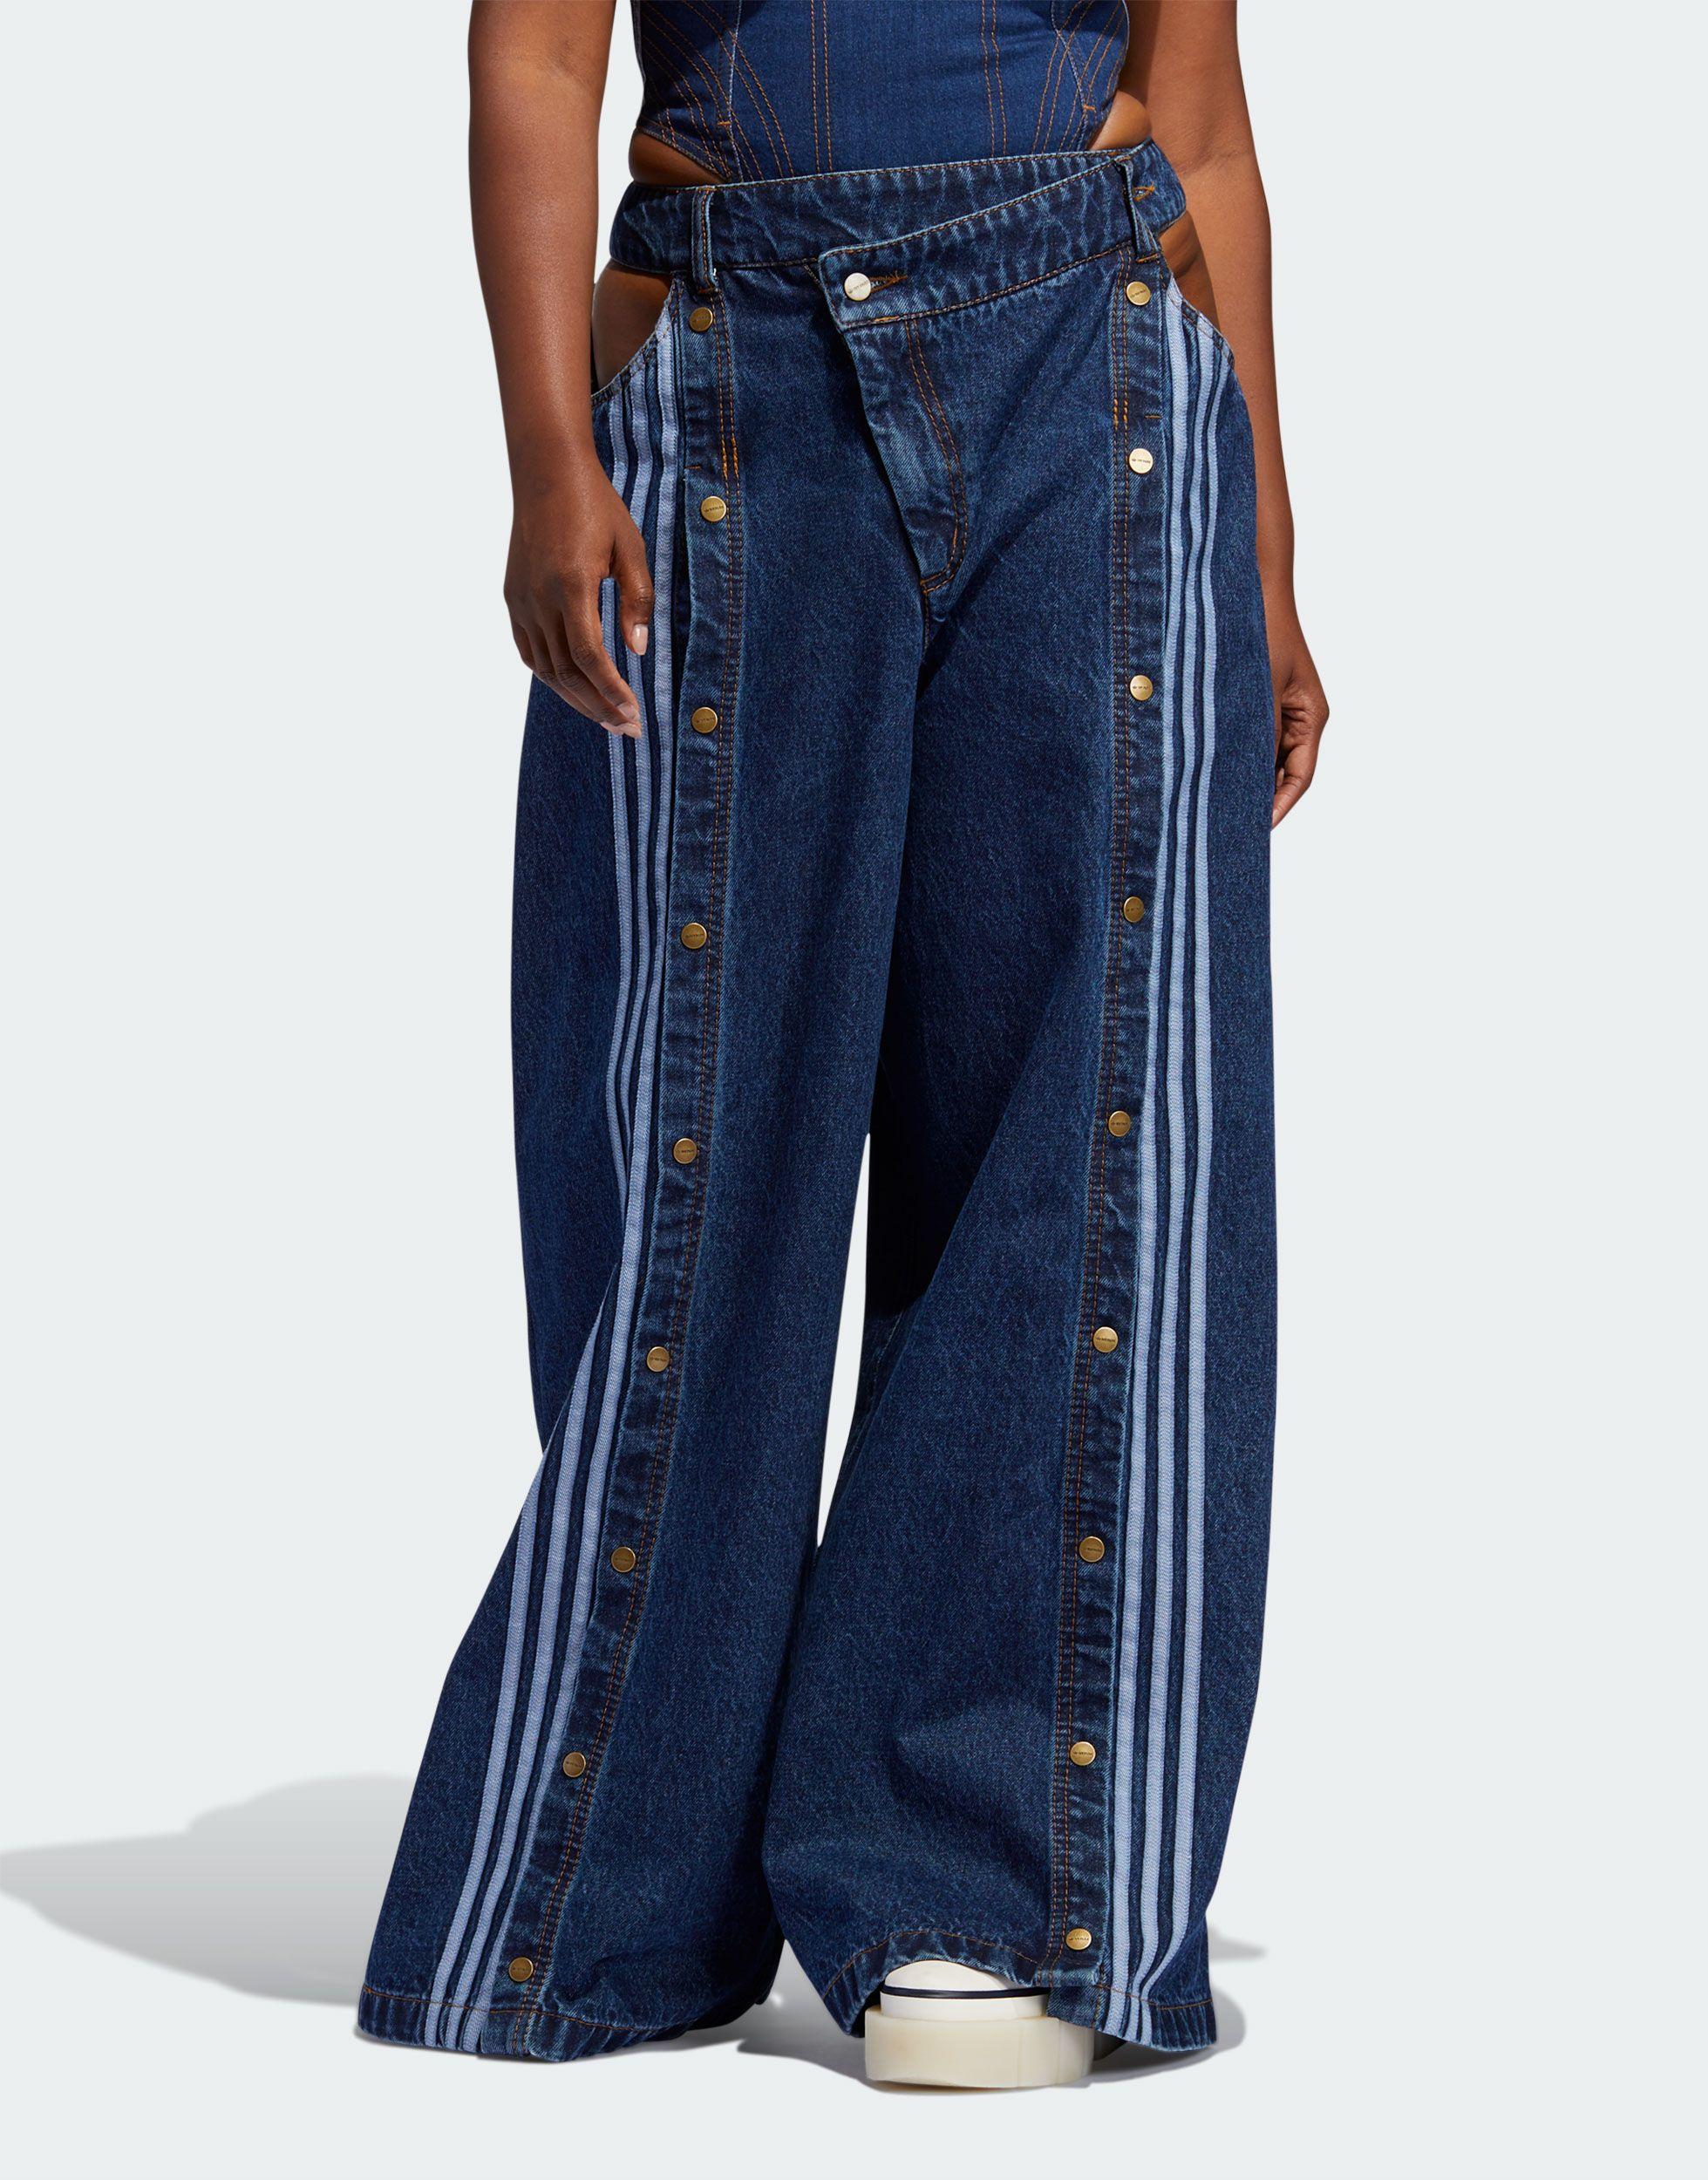 Ivy Park Adidas Originals X Denim Popper Jeans in Blue | Lyst Canada